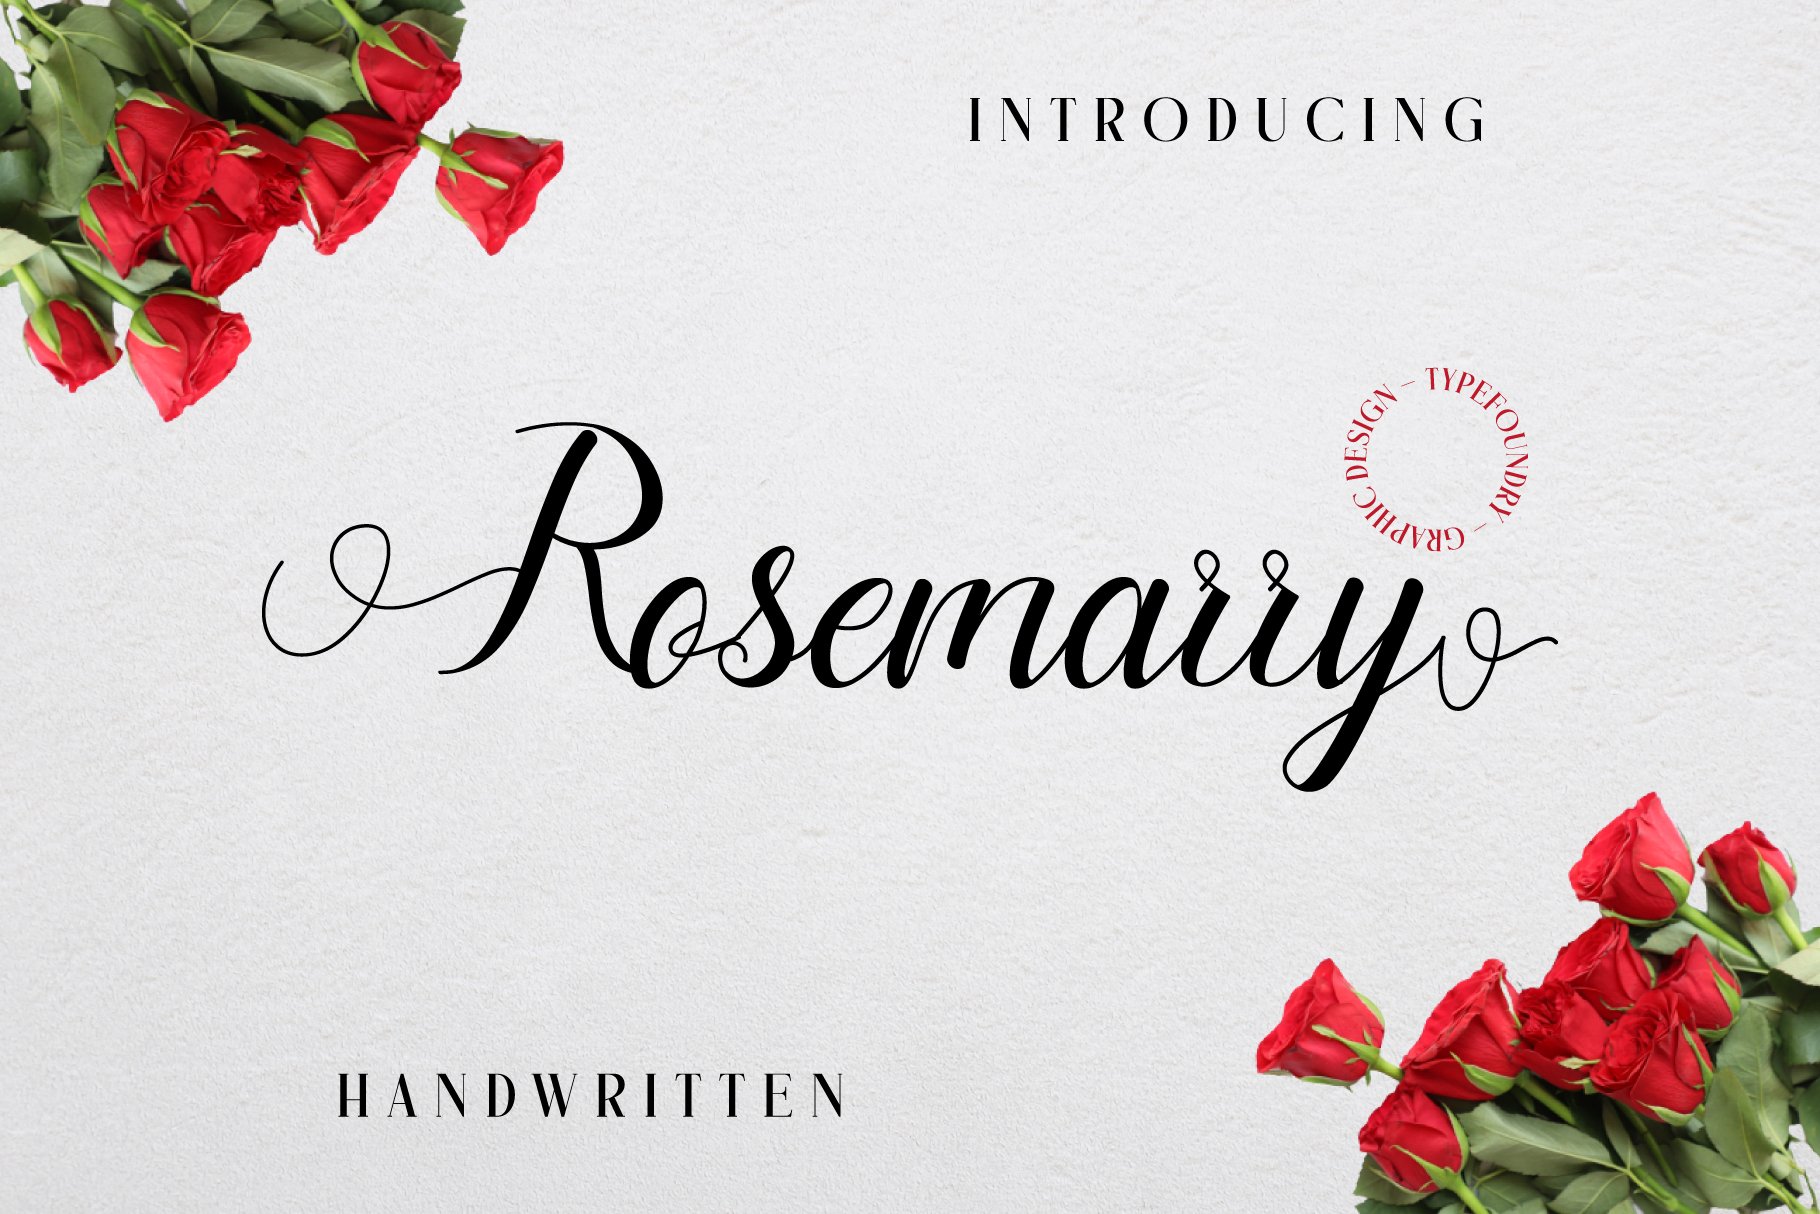 Rosemarry Handwritten Script cover image.